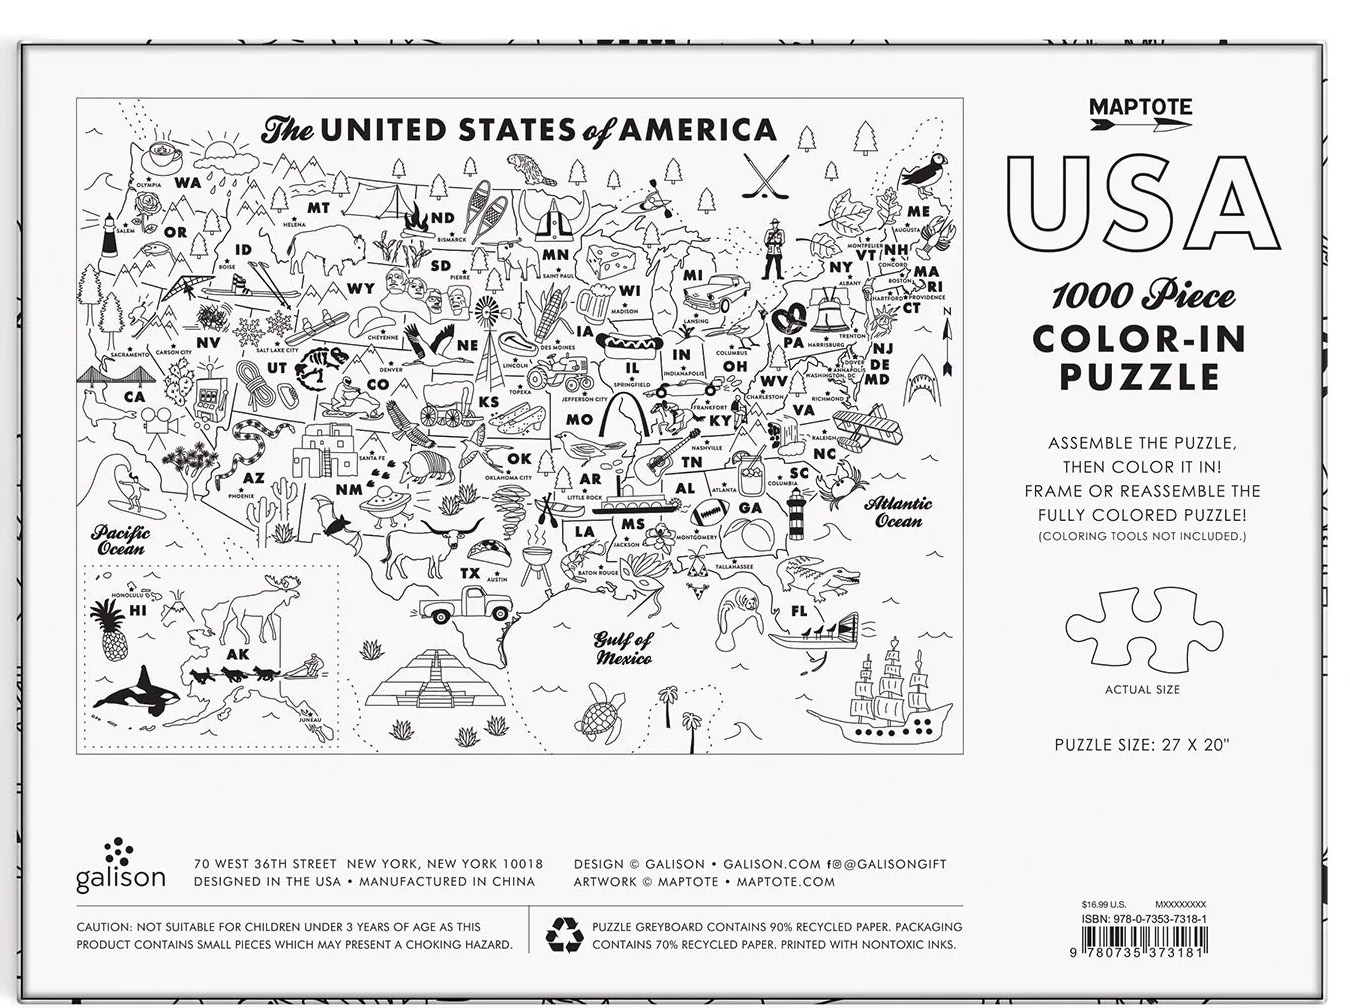 Maptote USA Color-In